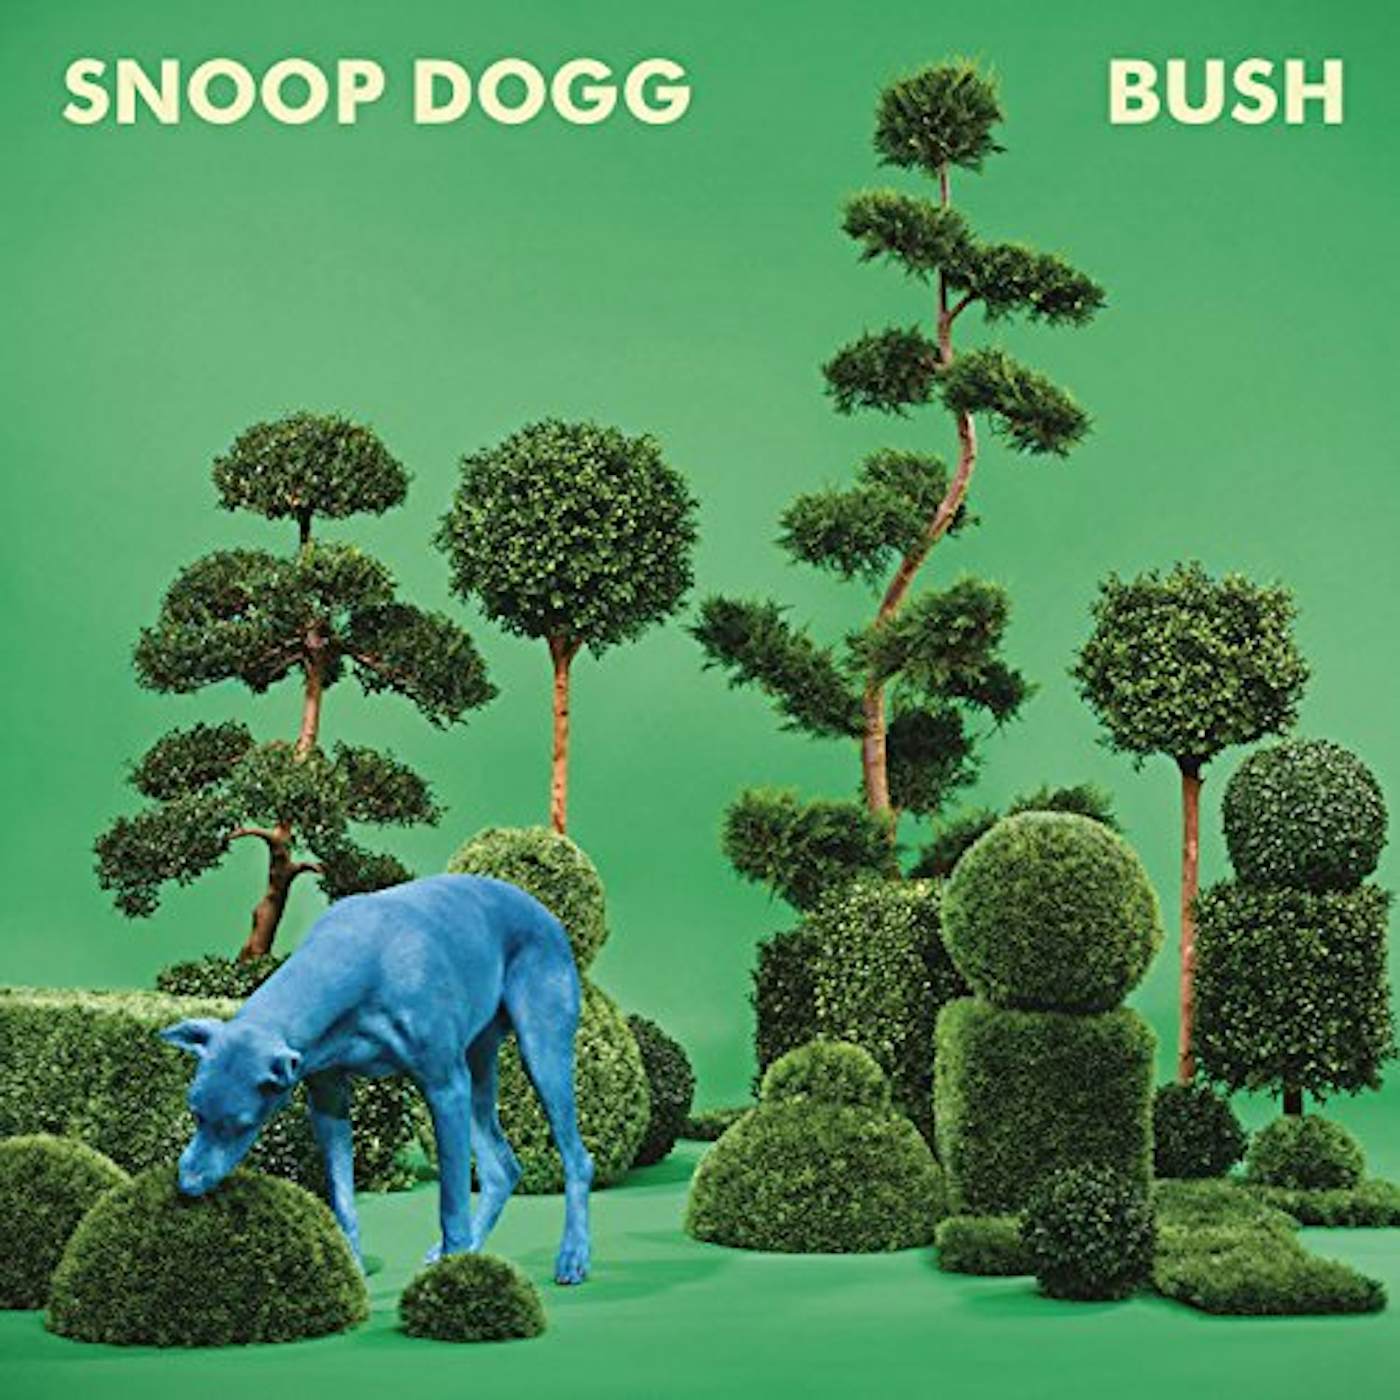 Snoop Dogg Bush Vinyl Record